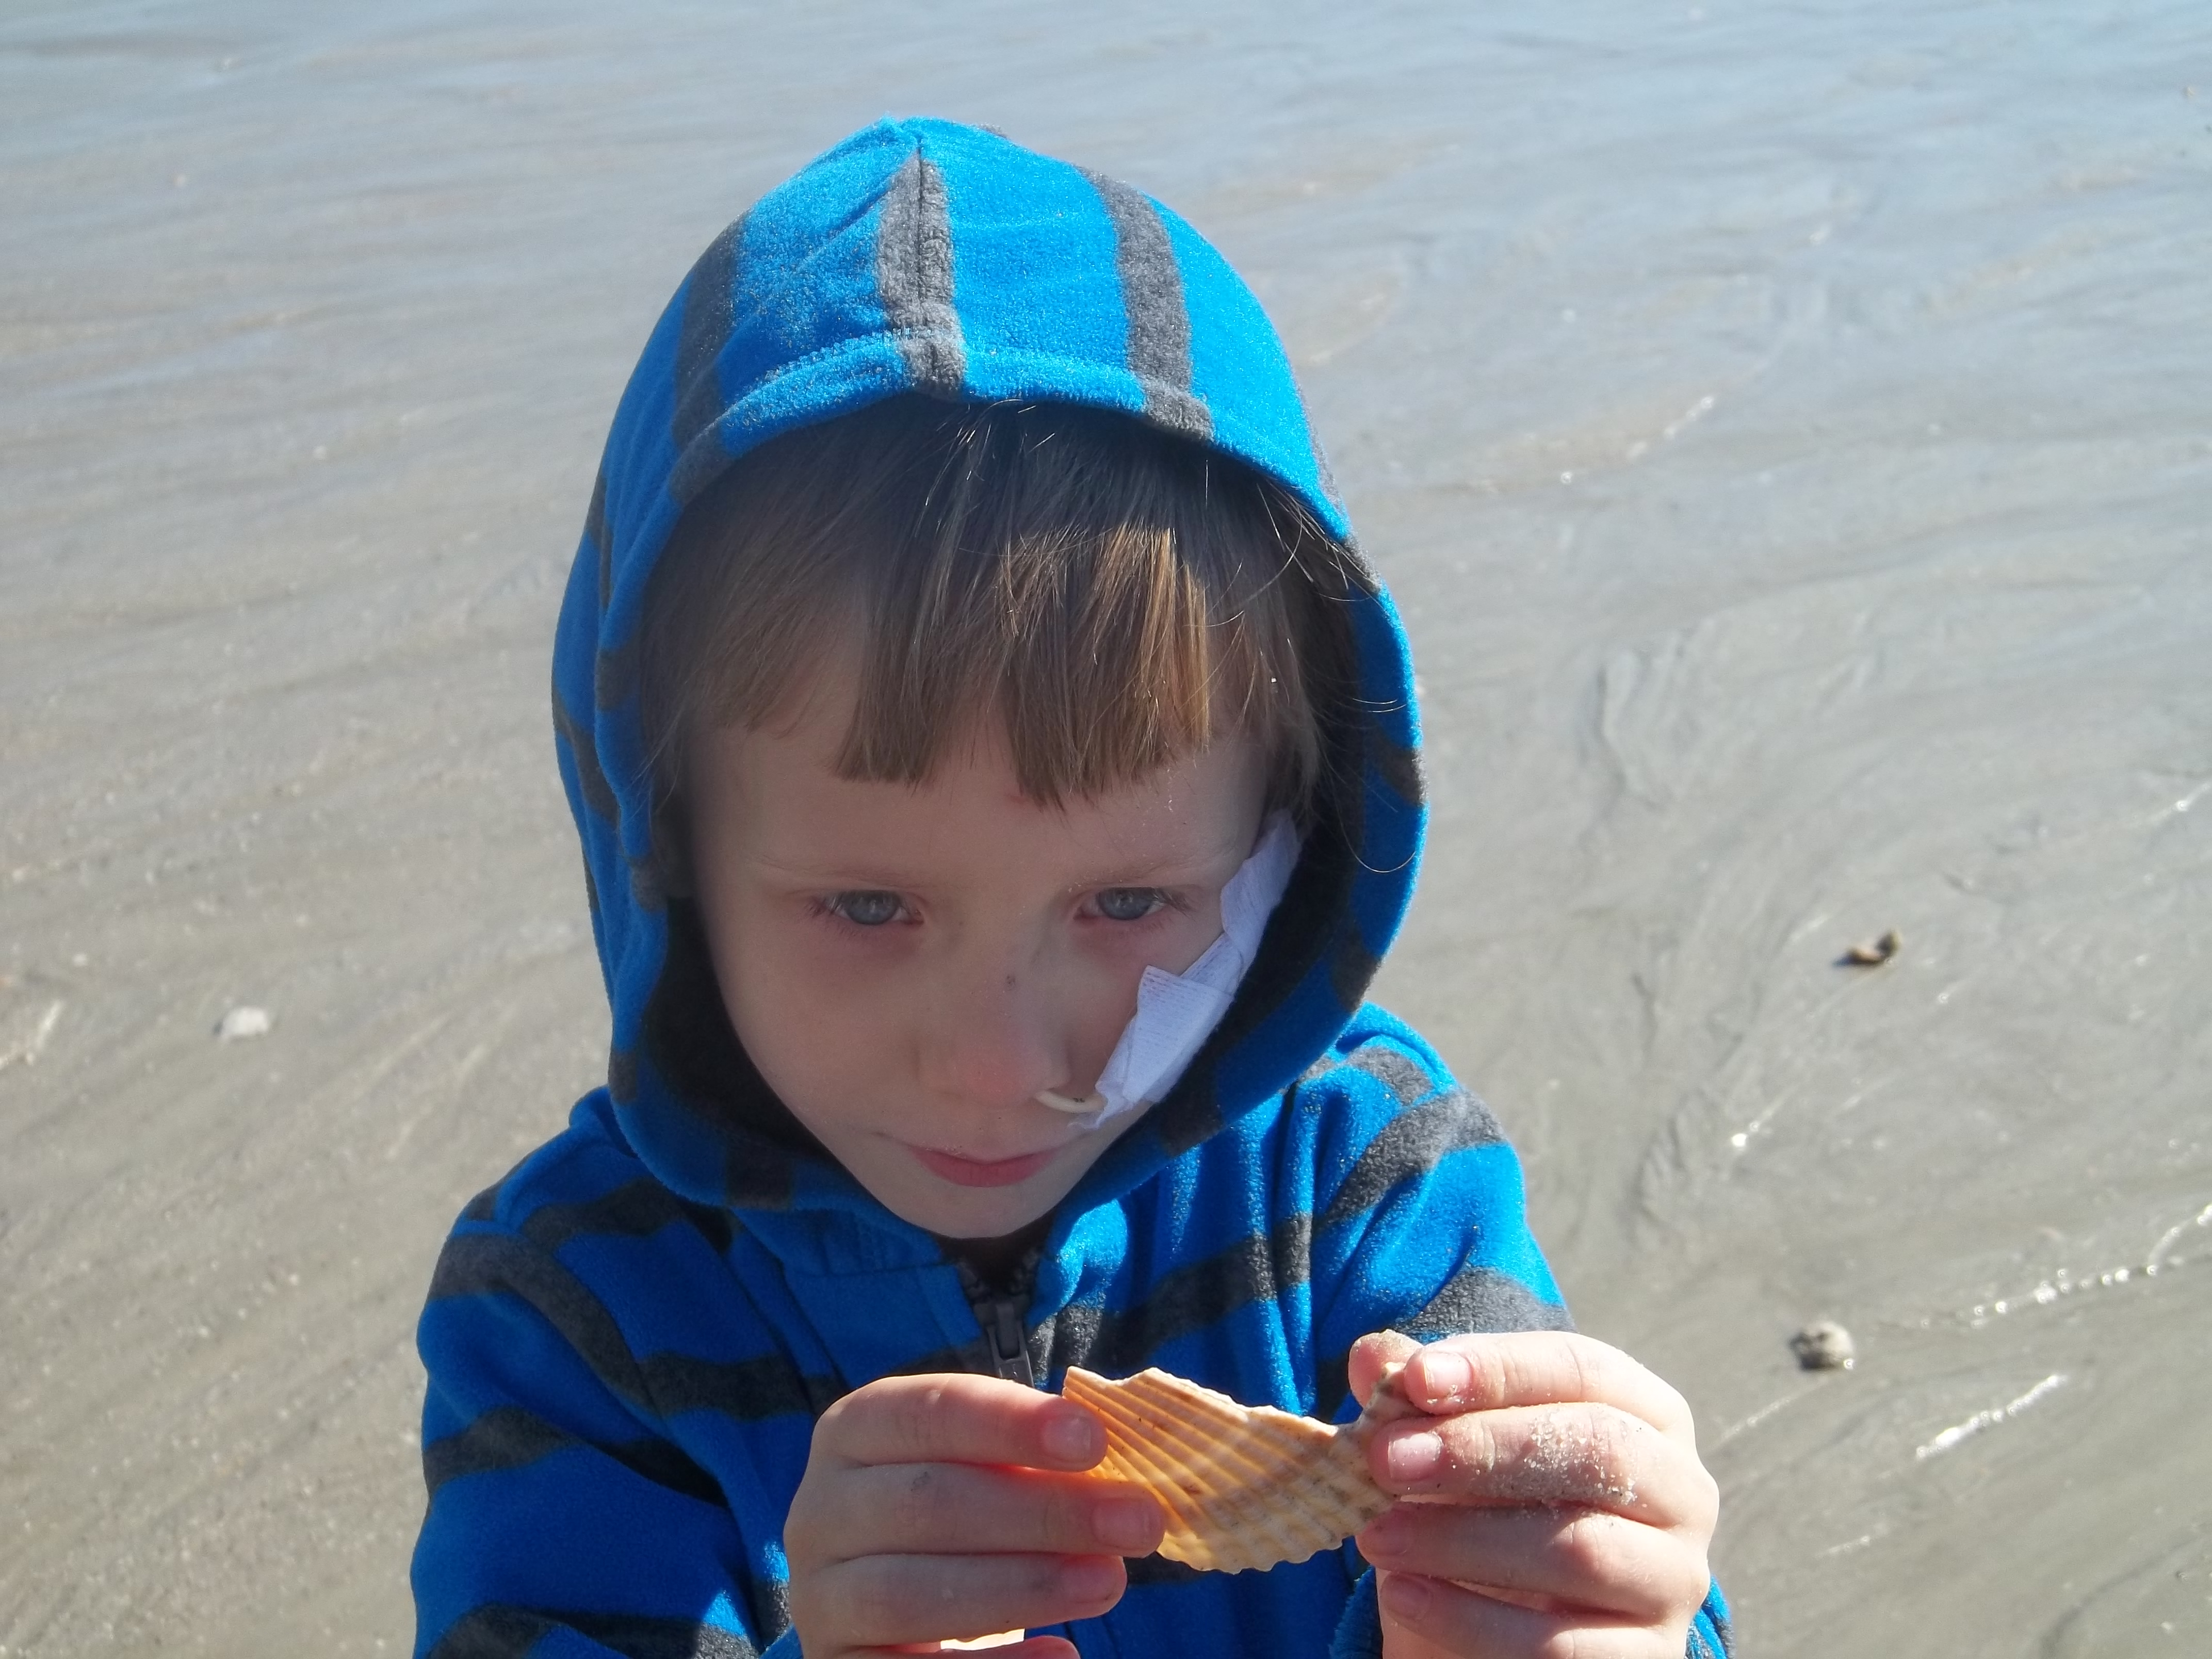 My little guy on Myrtle beach